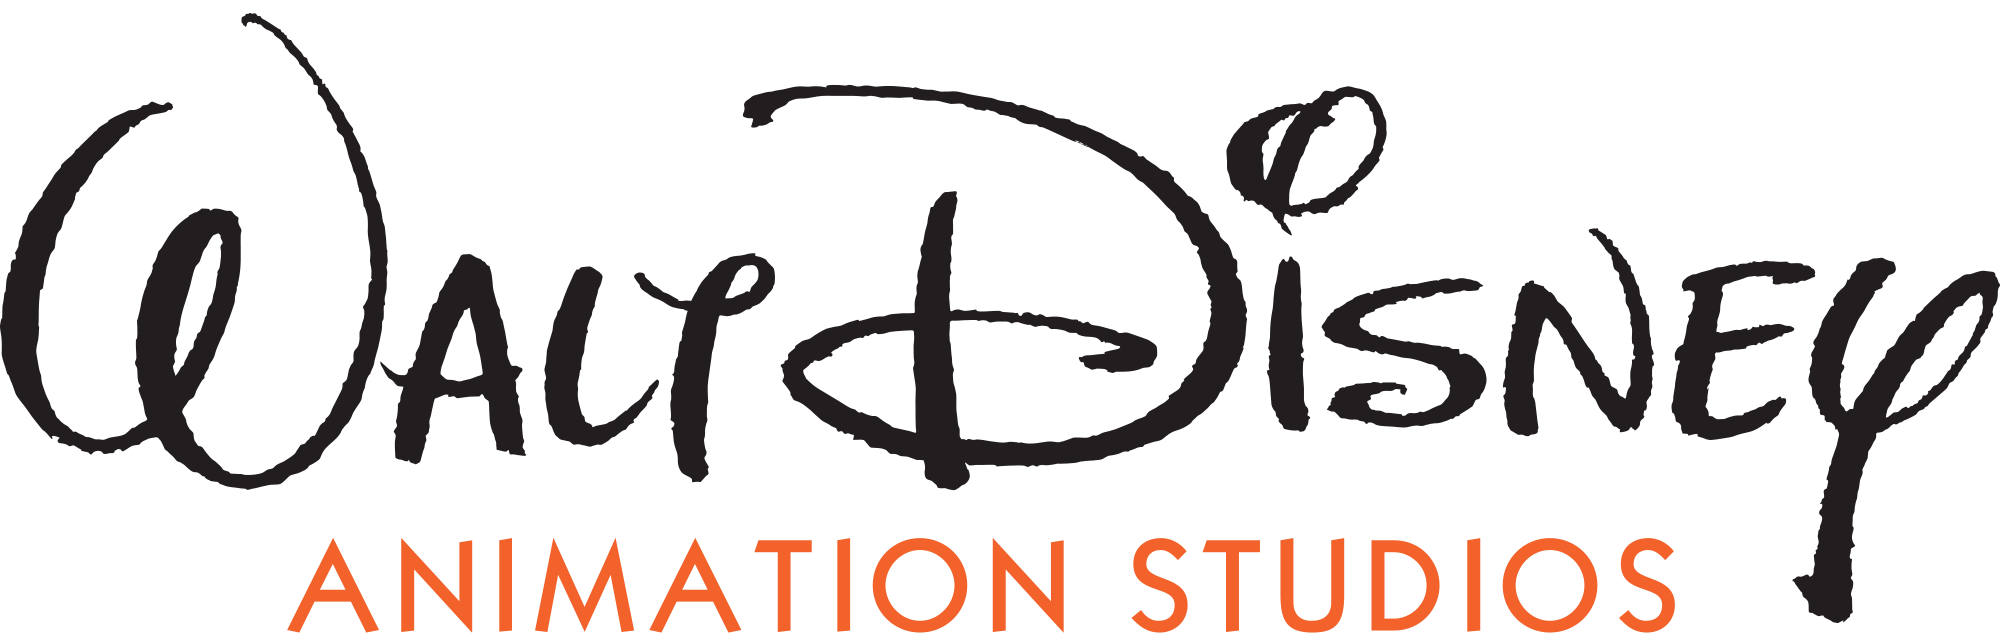 Disney Animation Logo - Walt Disney Animation Studios Logo Animated Logo Video Tools at www ...